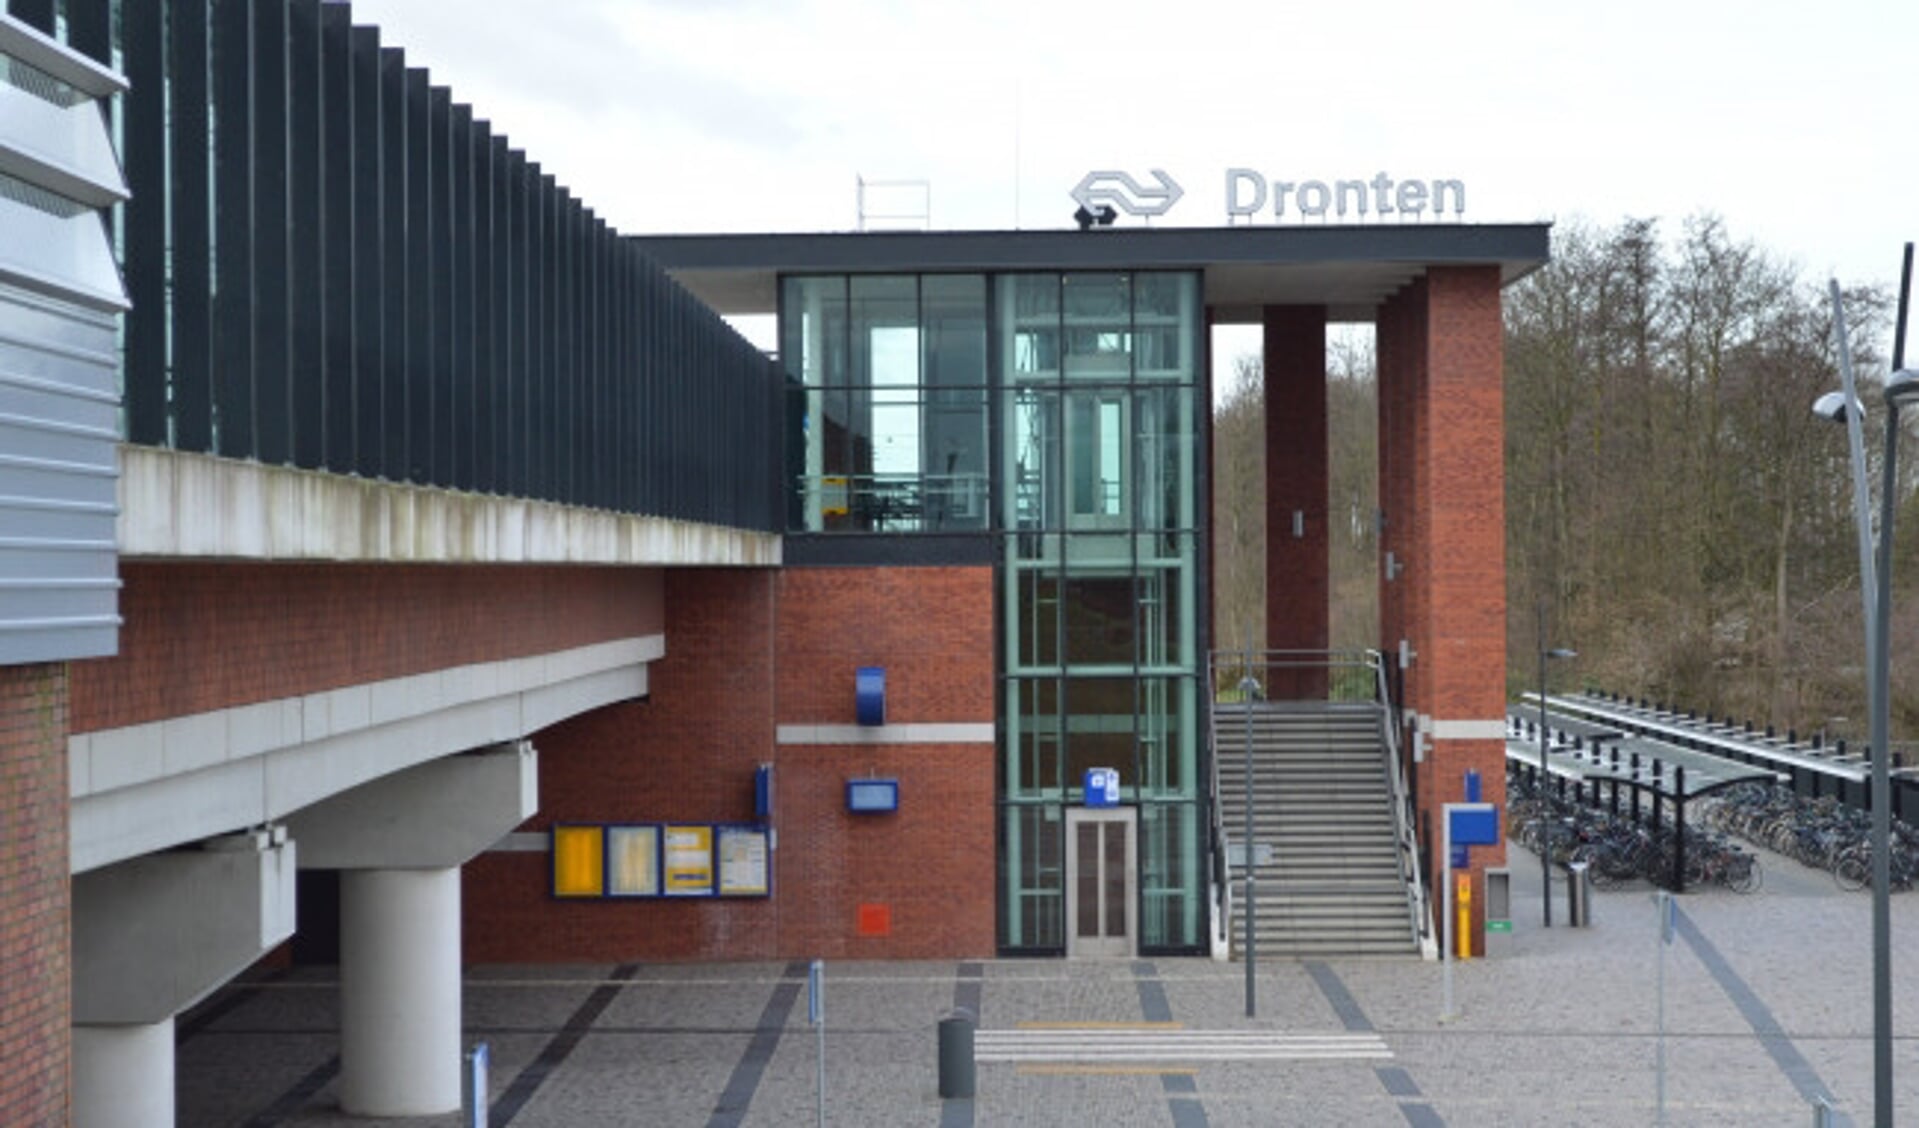  Station Dronten